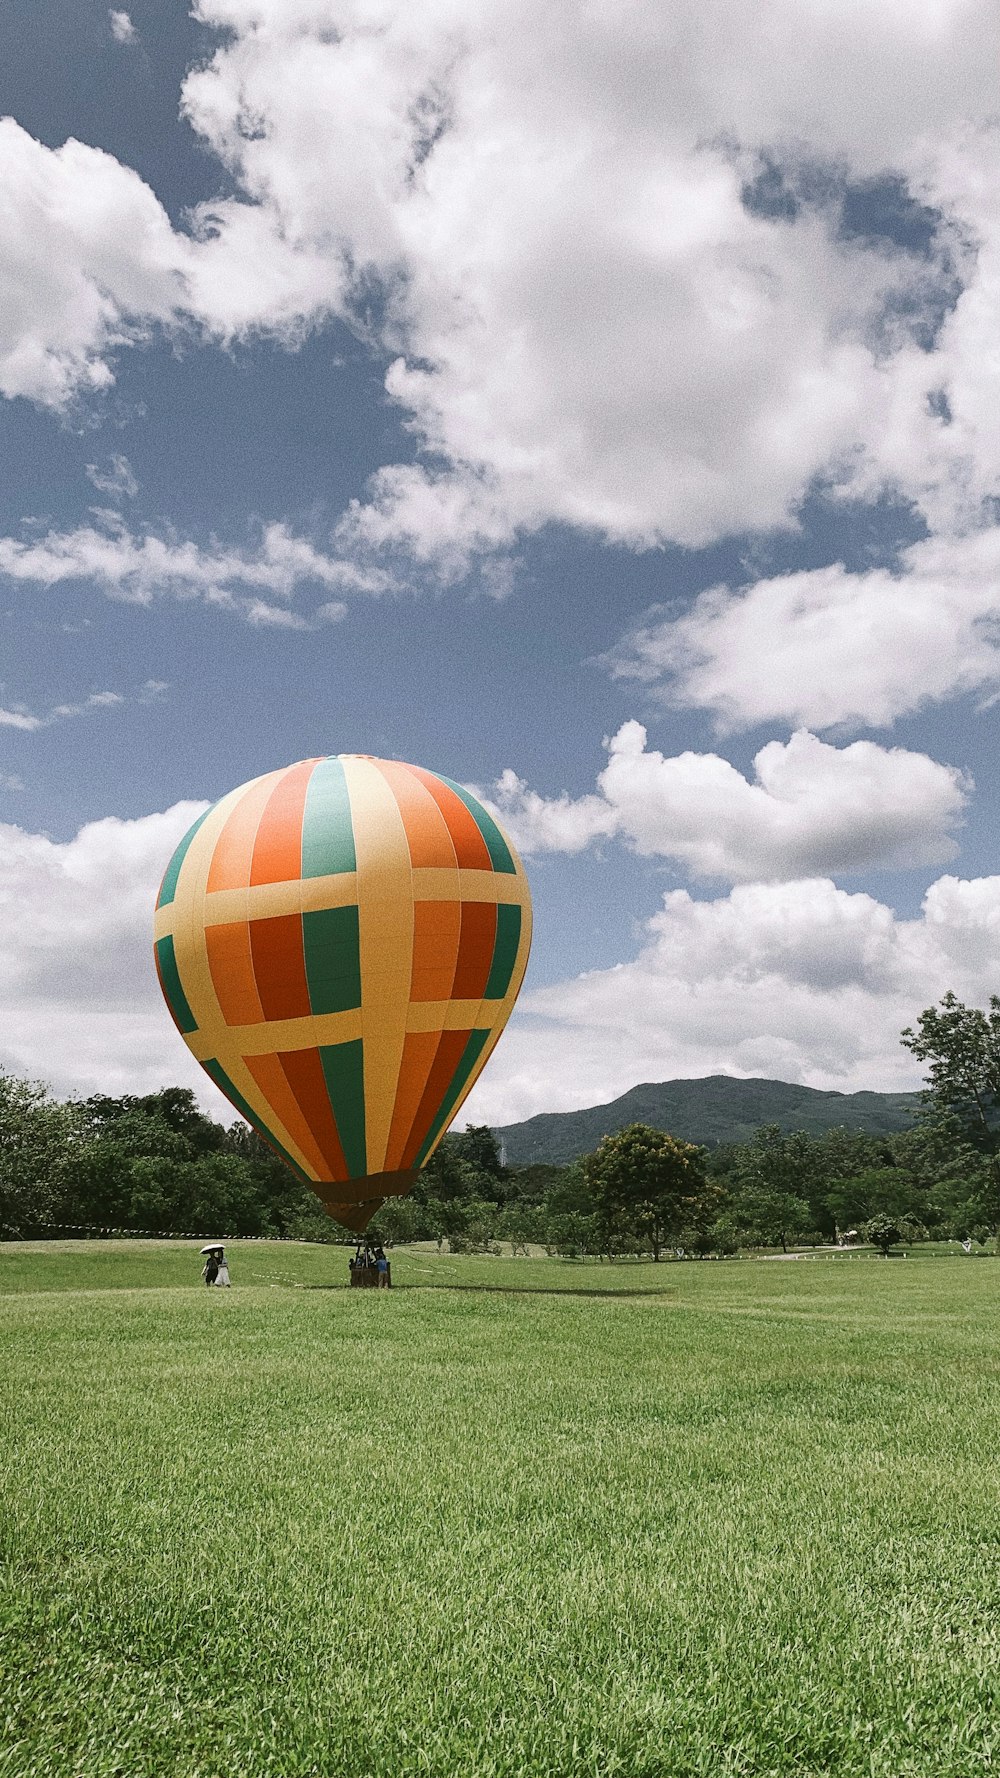 Ein großer Heißluftballon fliegt über ein saftig grünes Feld